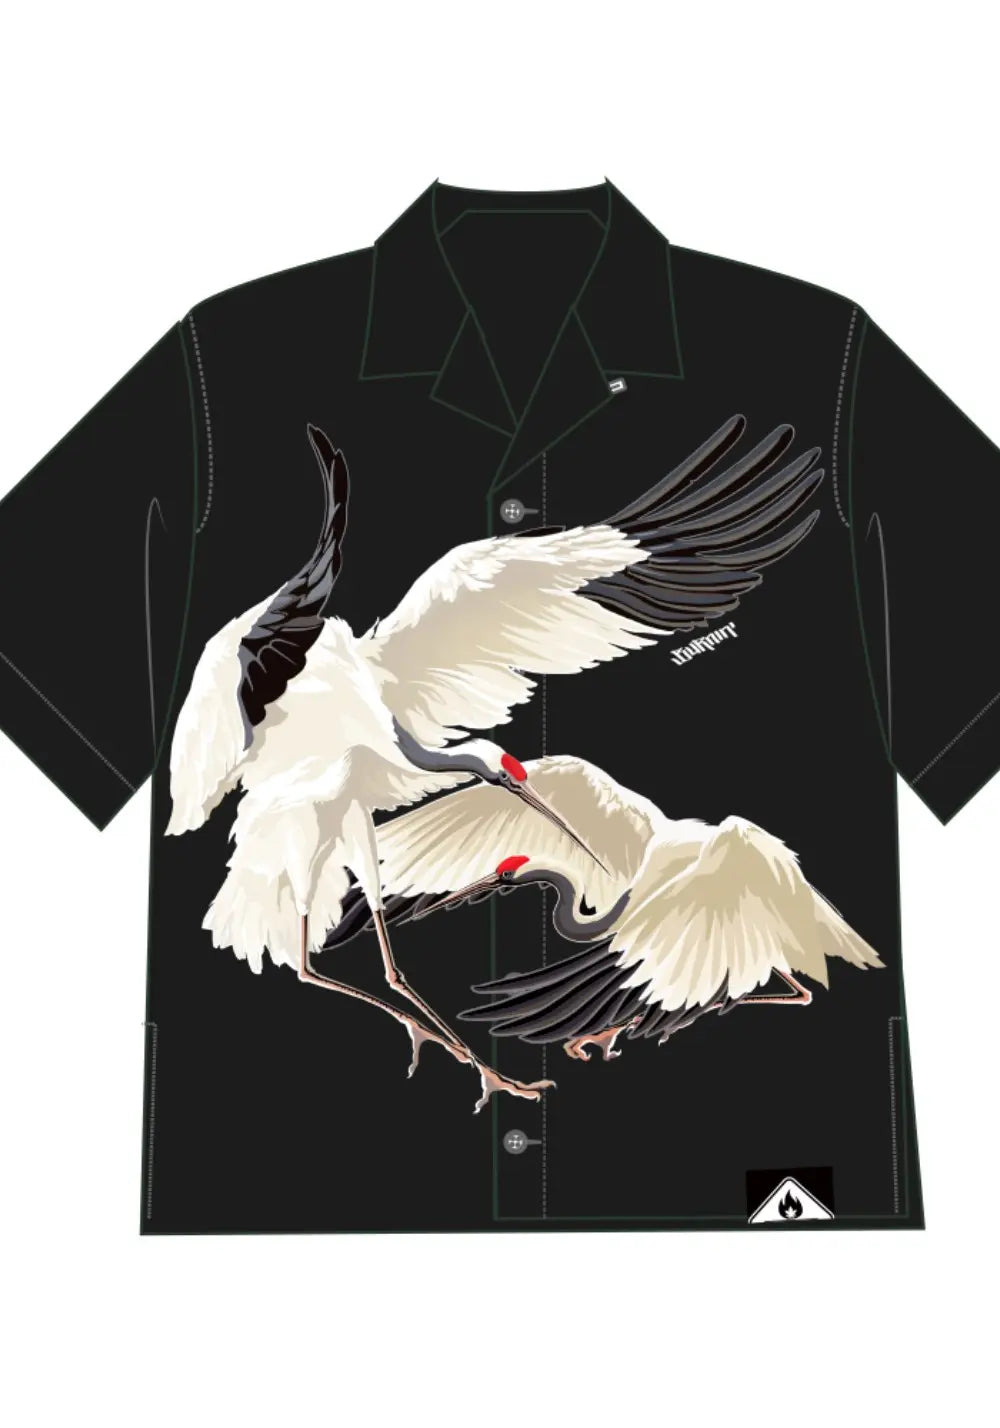 White Crane Shirt - PSYLOS 1, White Crane Shirt, Shirt, Burnin, PSYLOS 1